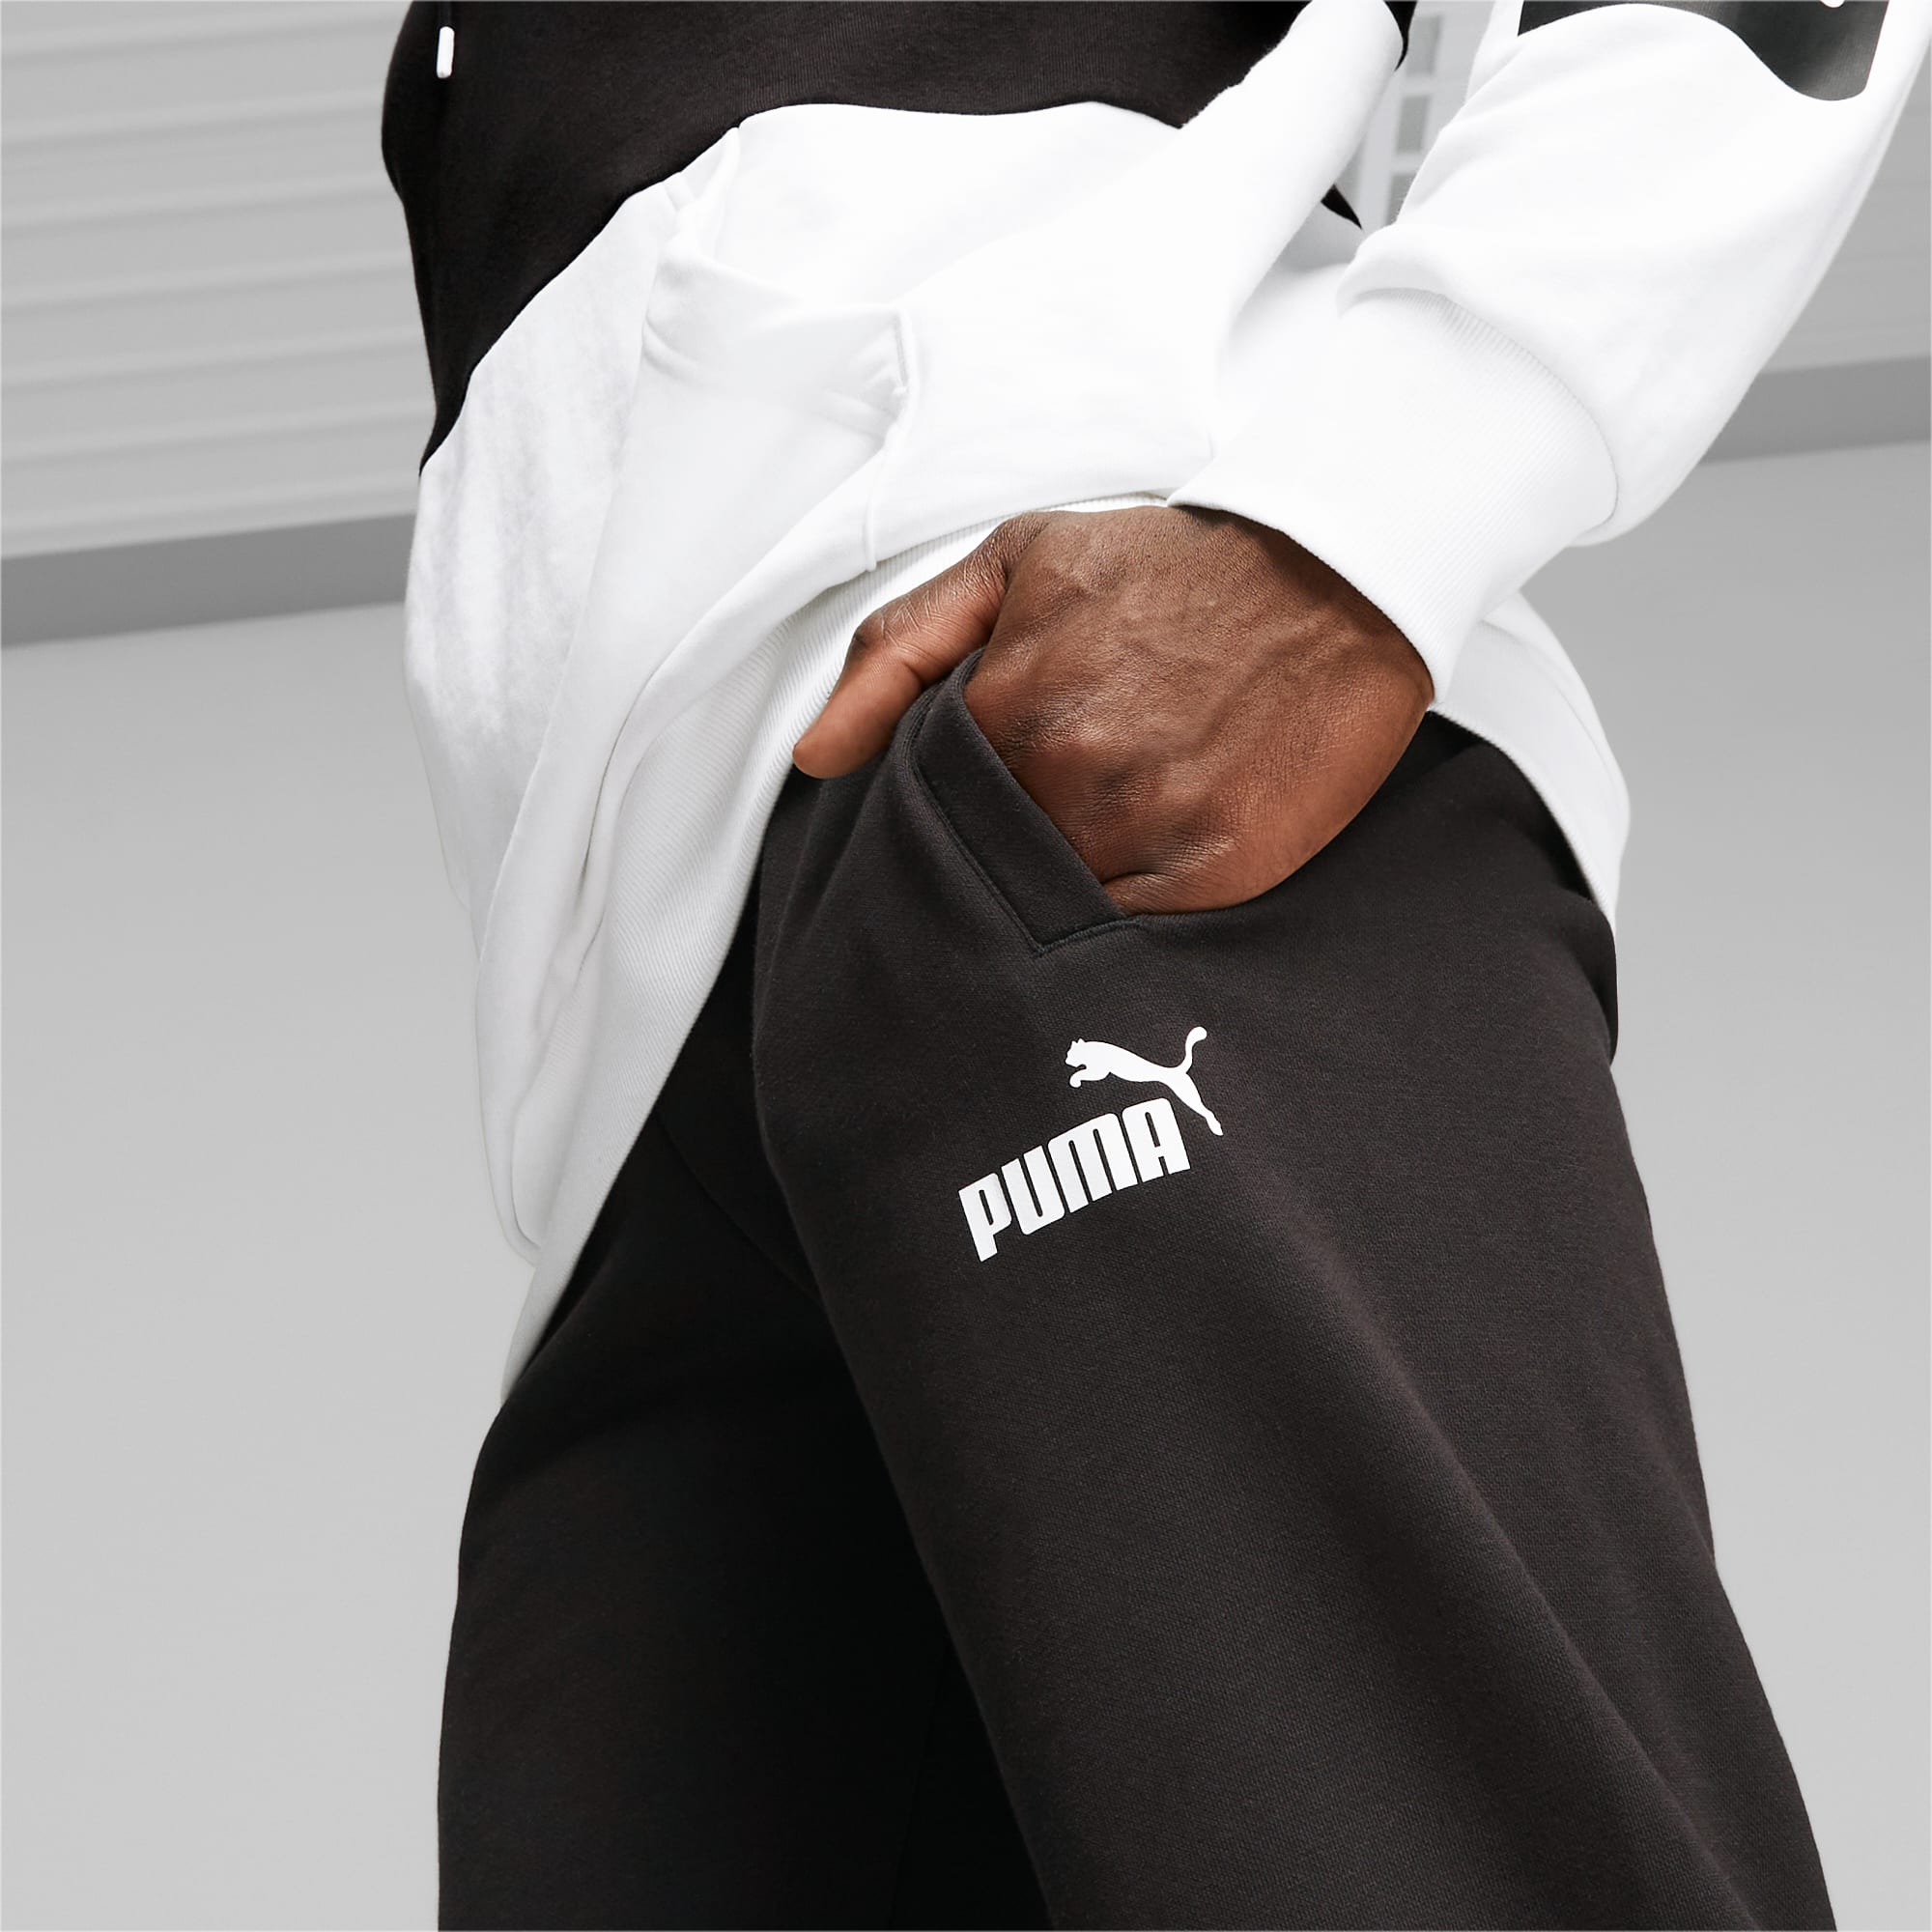 PUMA Power Men's Sweatpants, Black